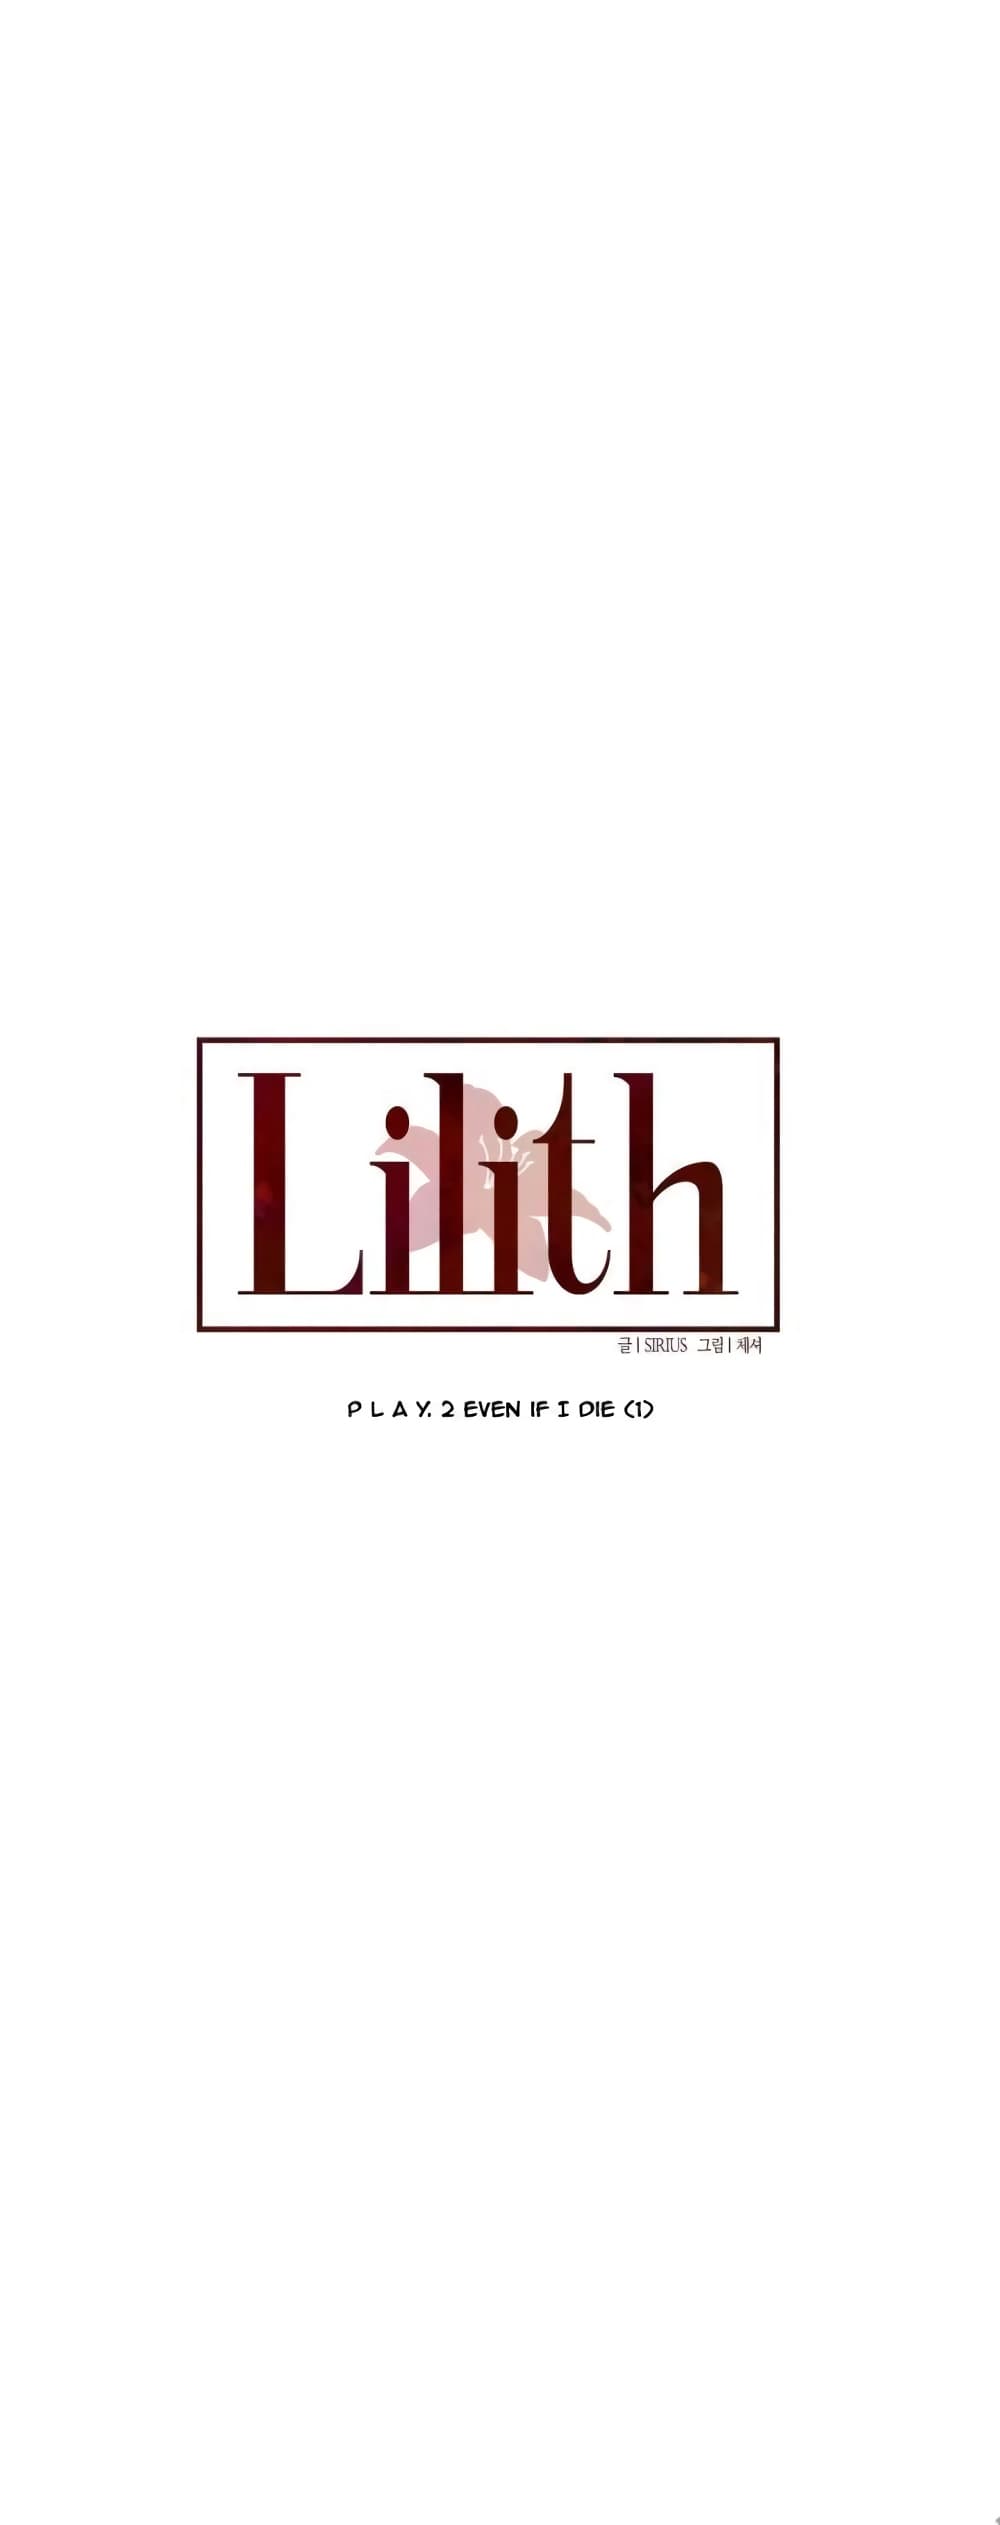 Lilith ตอนที่ 9 (9)